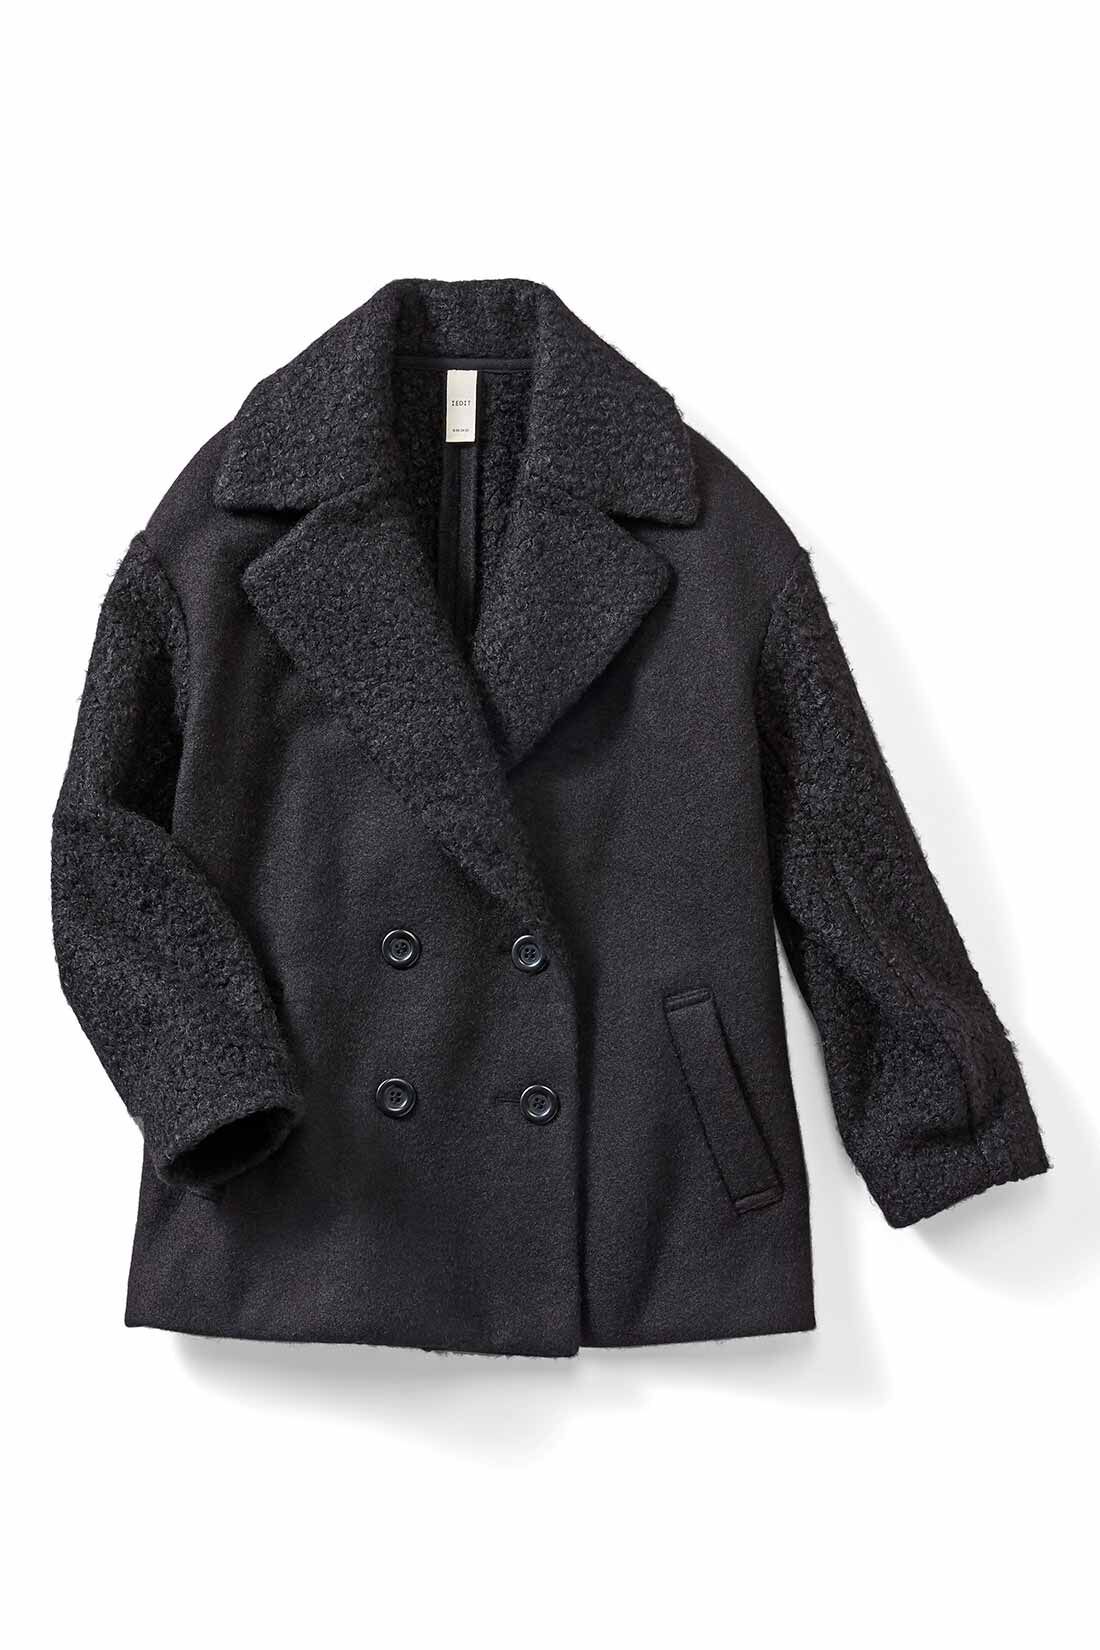 IEDIT[イディット]　ジャケット以上コート未満の大きめラペルとオーバーサイズが今気分のジャコット〈ブラック〉